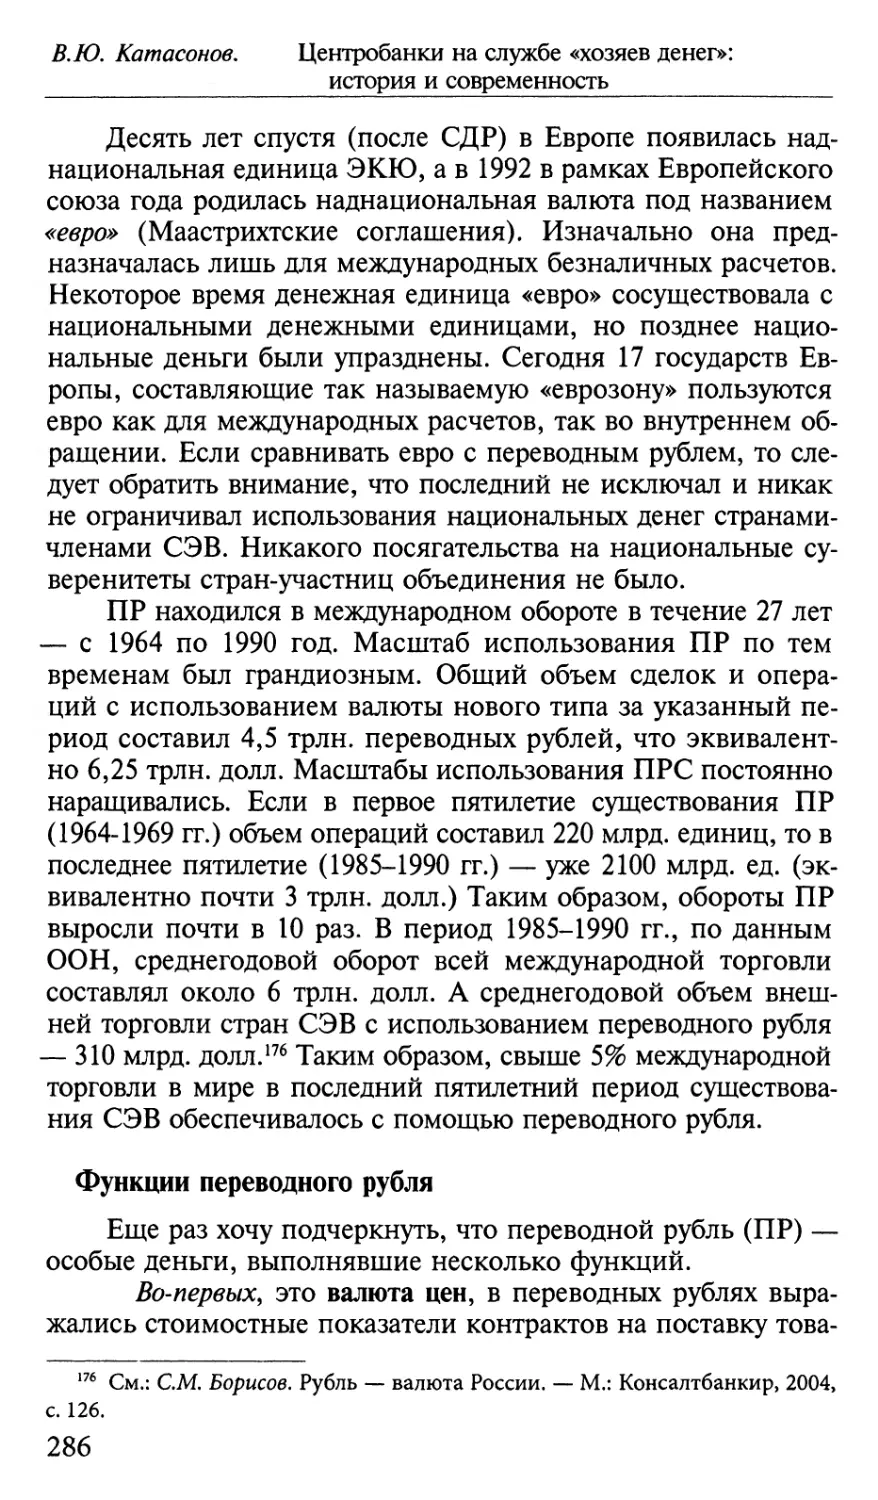 Функции переводного рубля